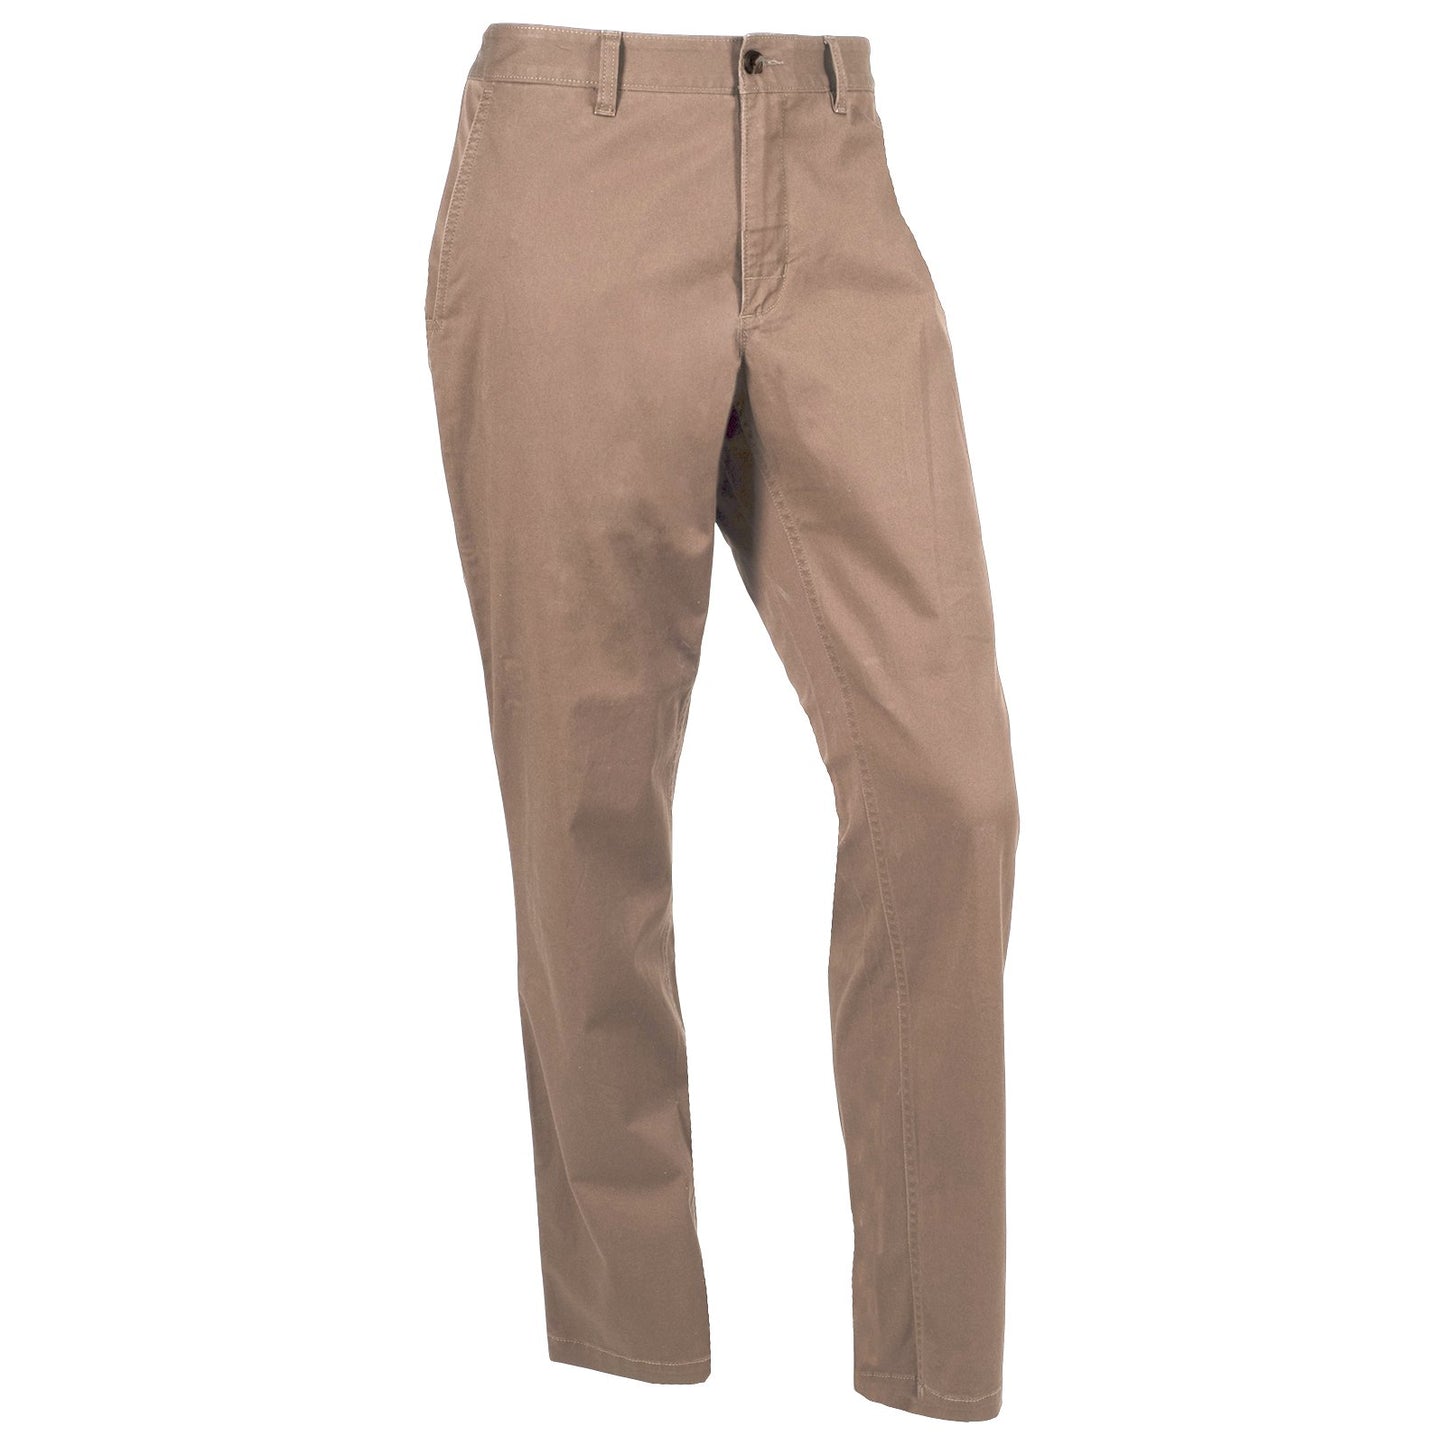 Homestead Chino Pant Modern Fit - Retro Khaki